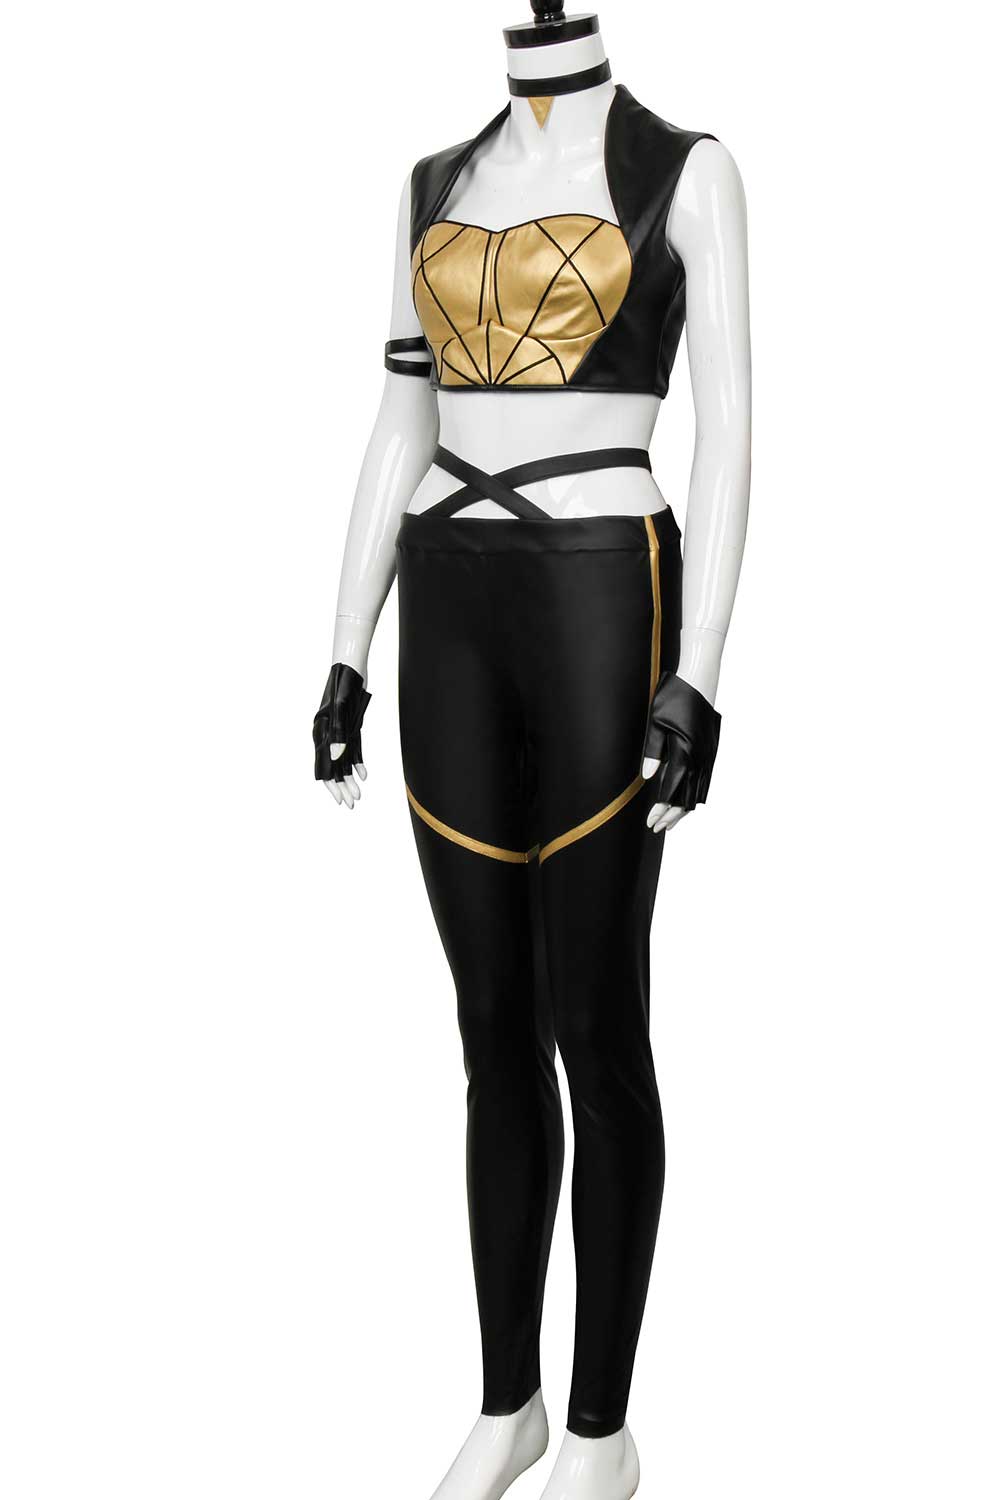 LOL League of Legends KDA Kaisa Leather Punk Uniform Cosplay Costume Suit S-2XL 